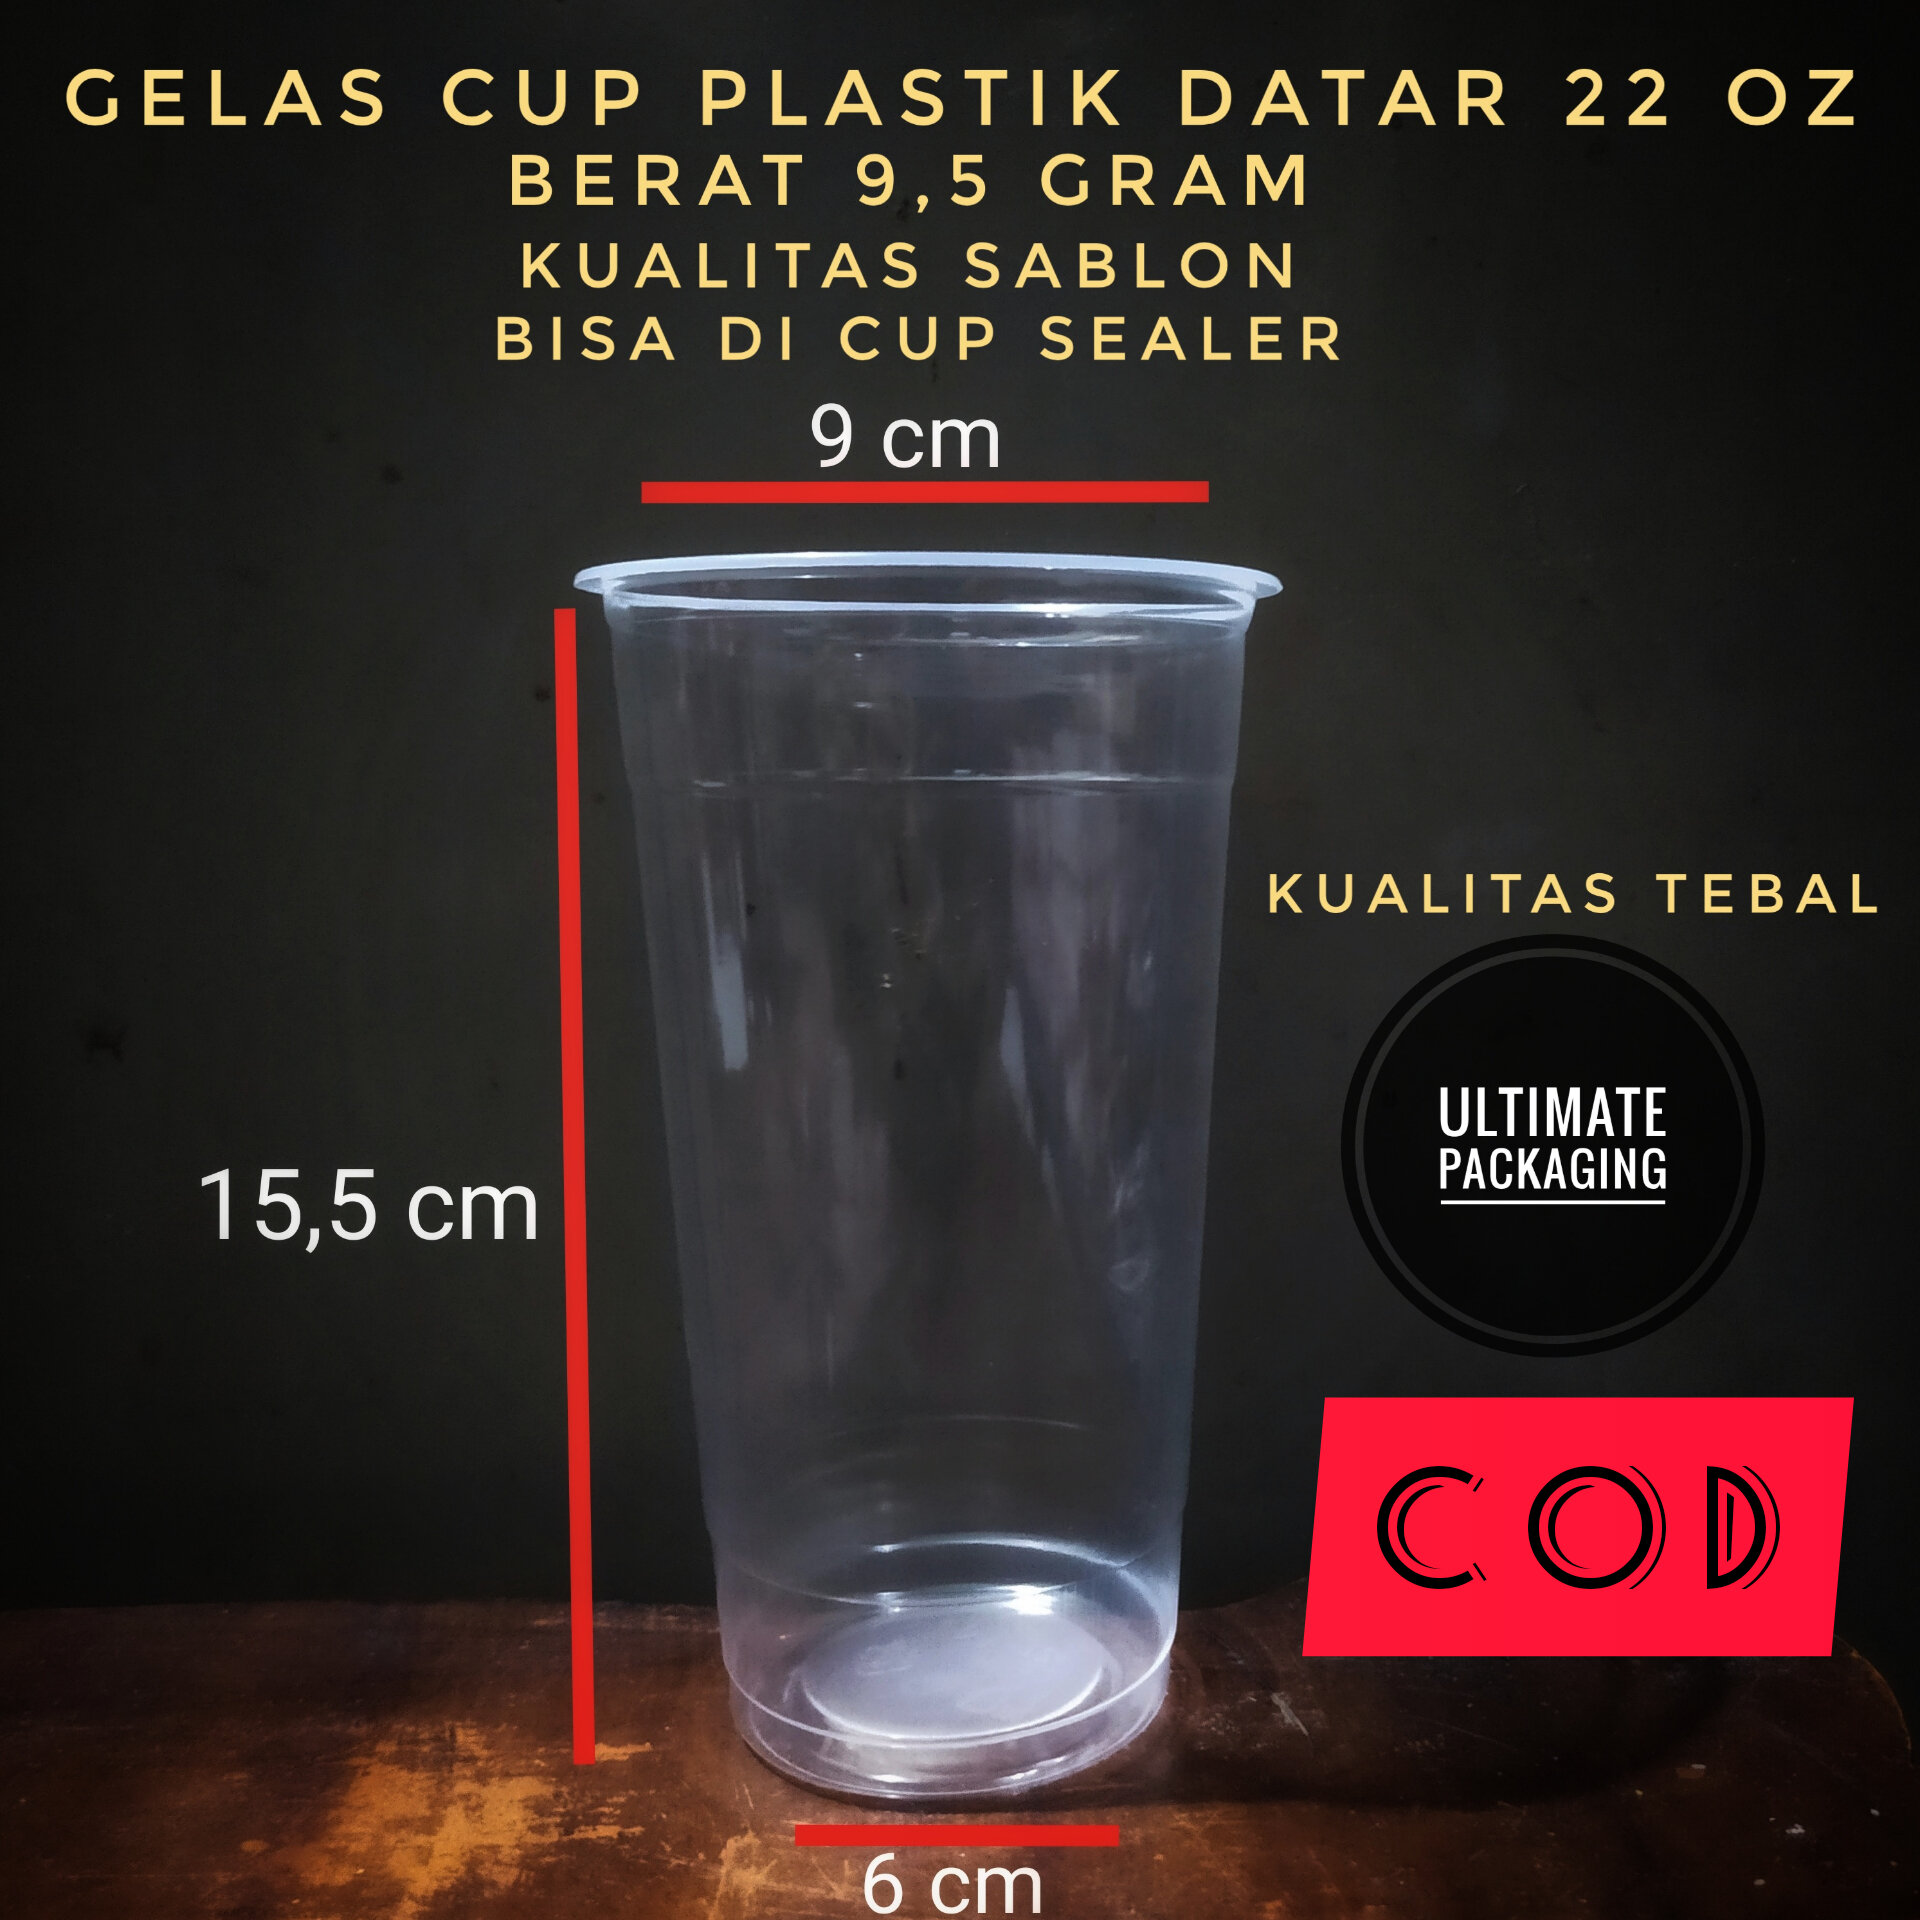 Gelas Cup Plastik Datar 22 Oz Isi 50 Pcs Lazada Indonesia 6753